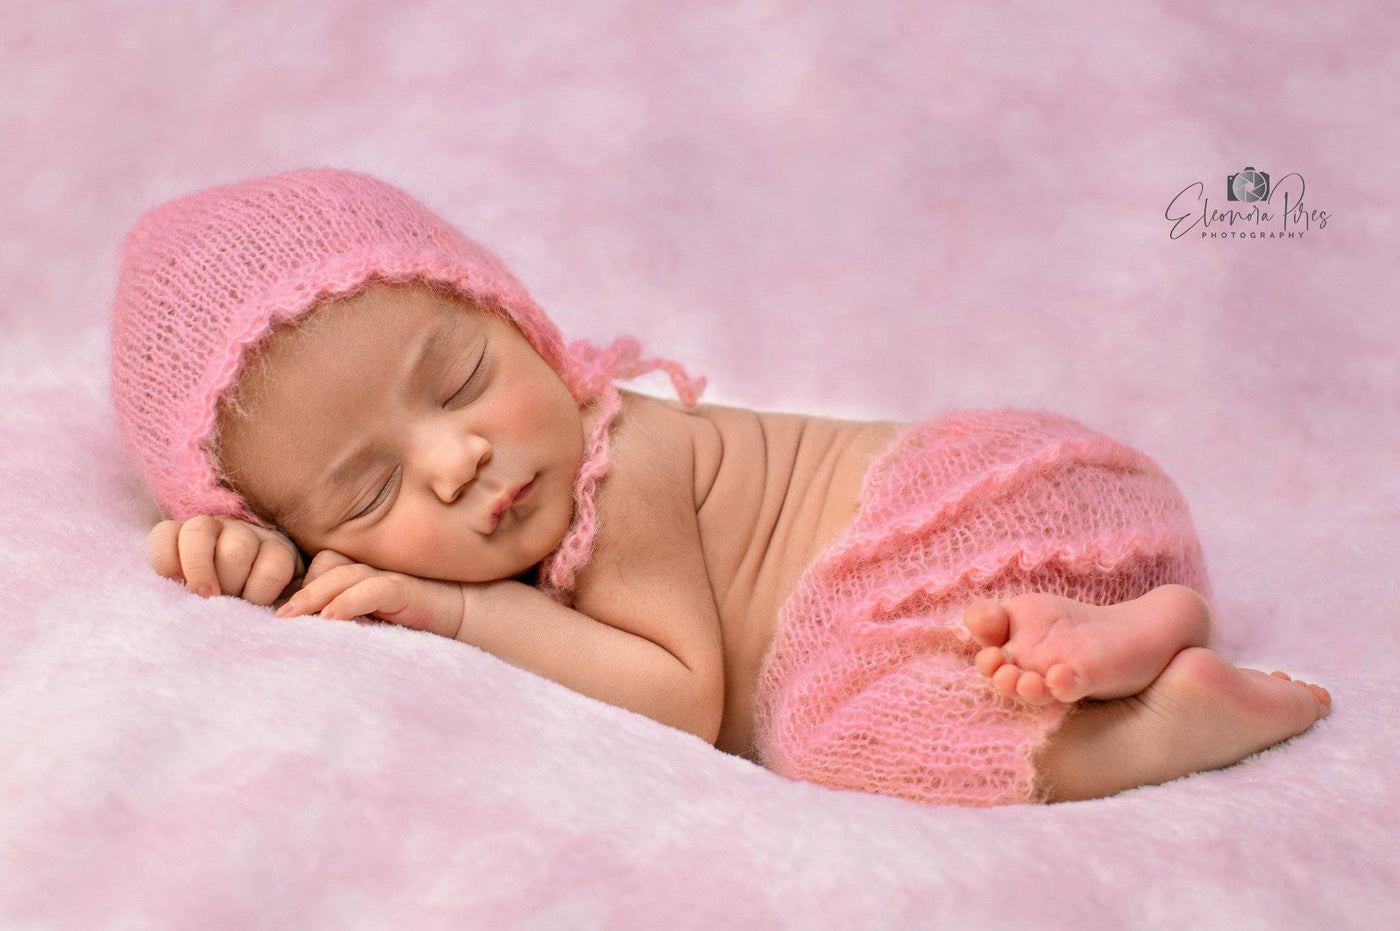 Pink Ruffles Mohair Newborn Pants and Hat Set - Beautiful Photo Props